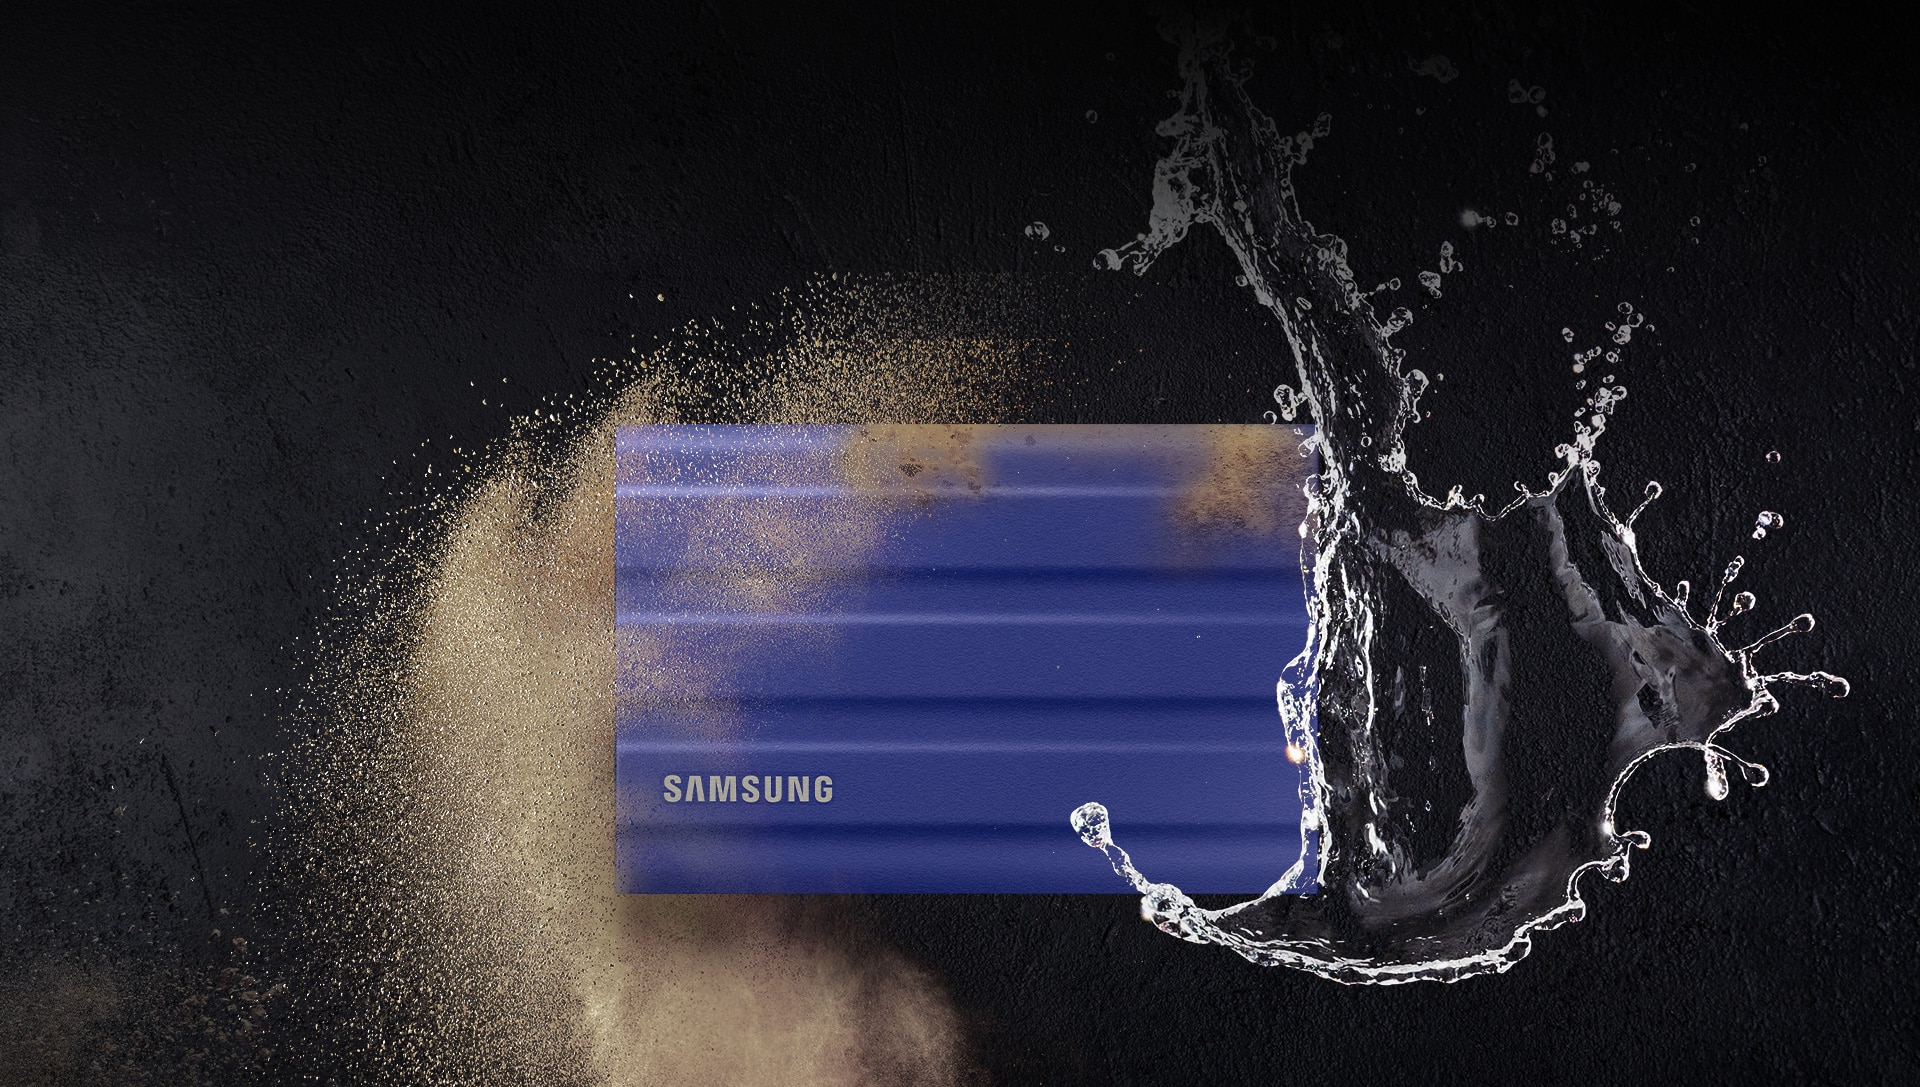 Samsung's bigger SSD Shield